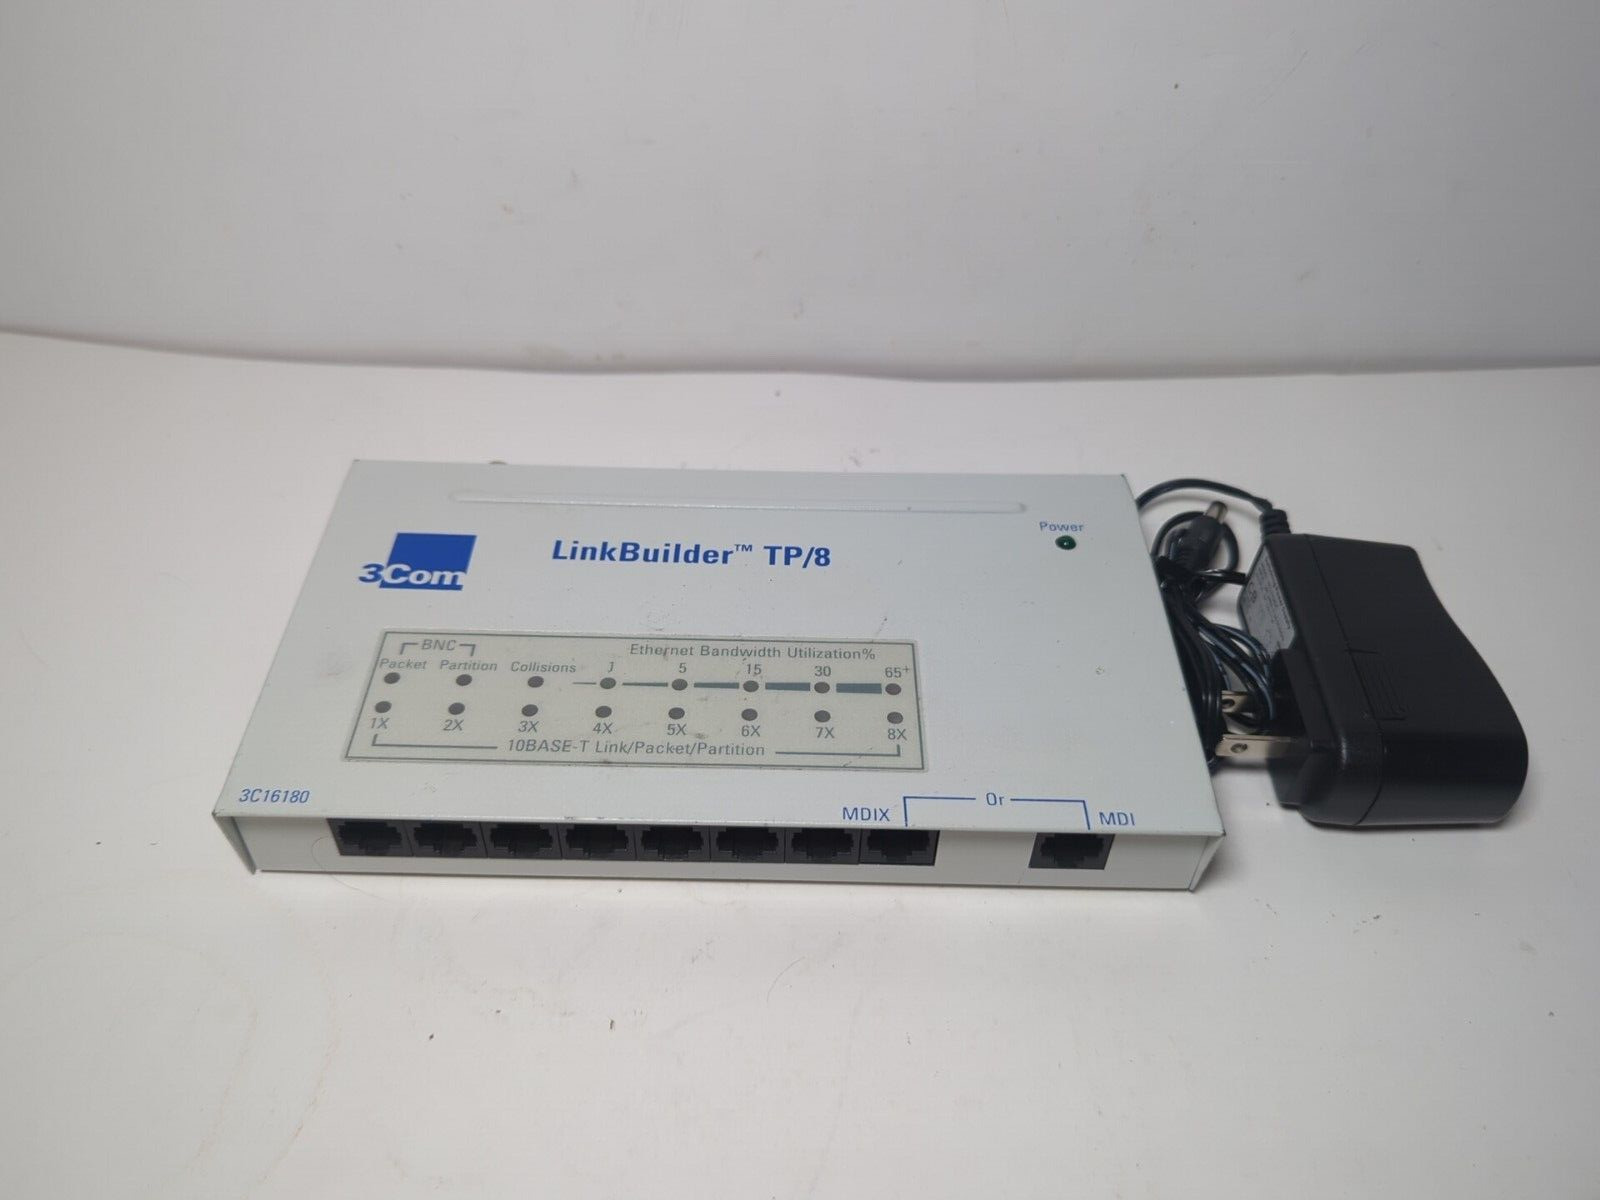 3Com 3C16180 LinkBuilder TP/8 Ethernet Hub, 8-Port, 7.5-12VAC 50-60Hz 8VA